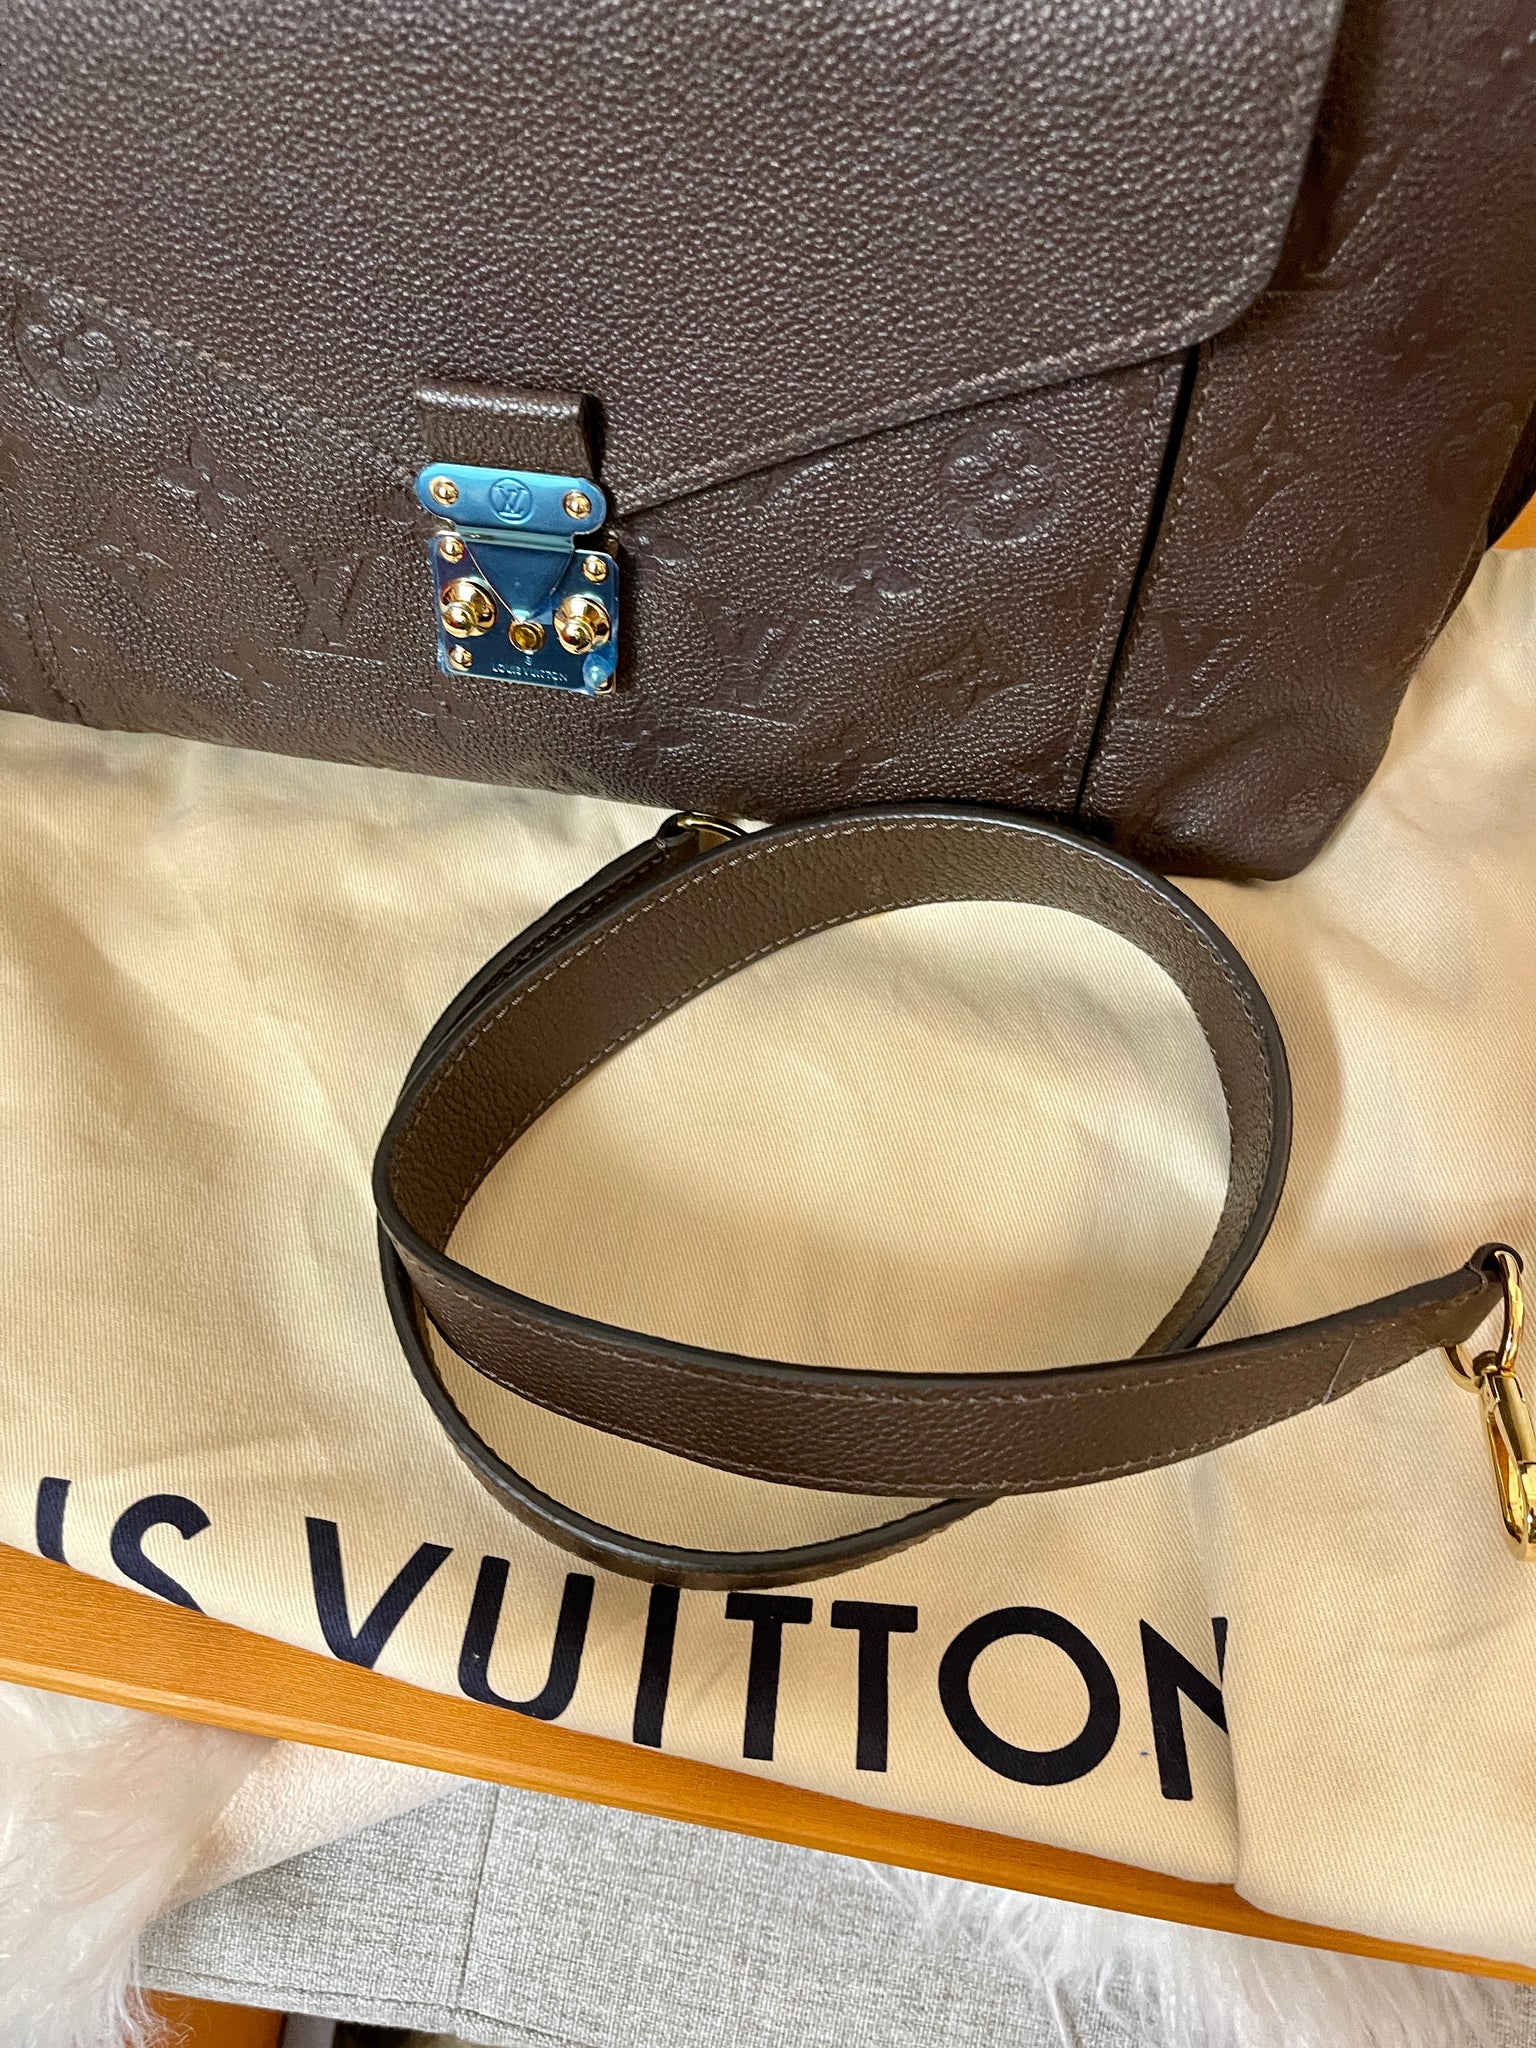 Louis Vuitton Empreinte Leather Métis Hobo just in! Shop it NOW on  www.mymoshposh.com!